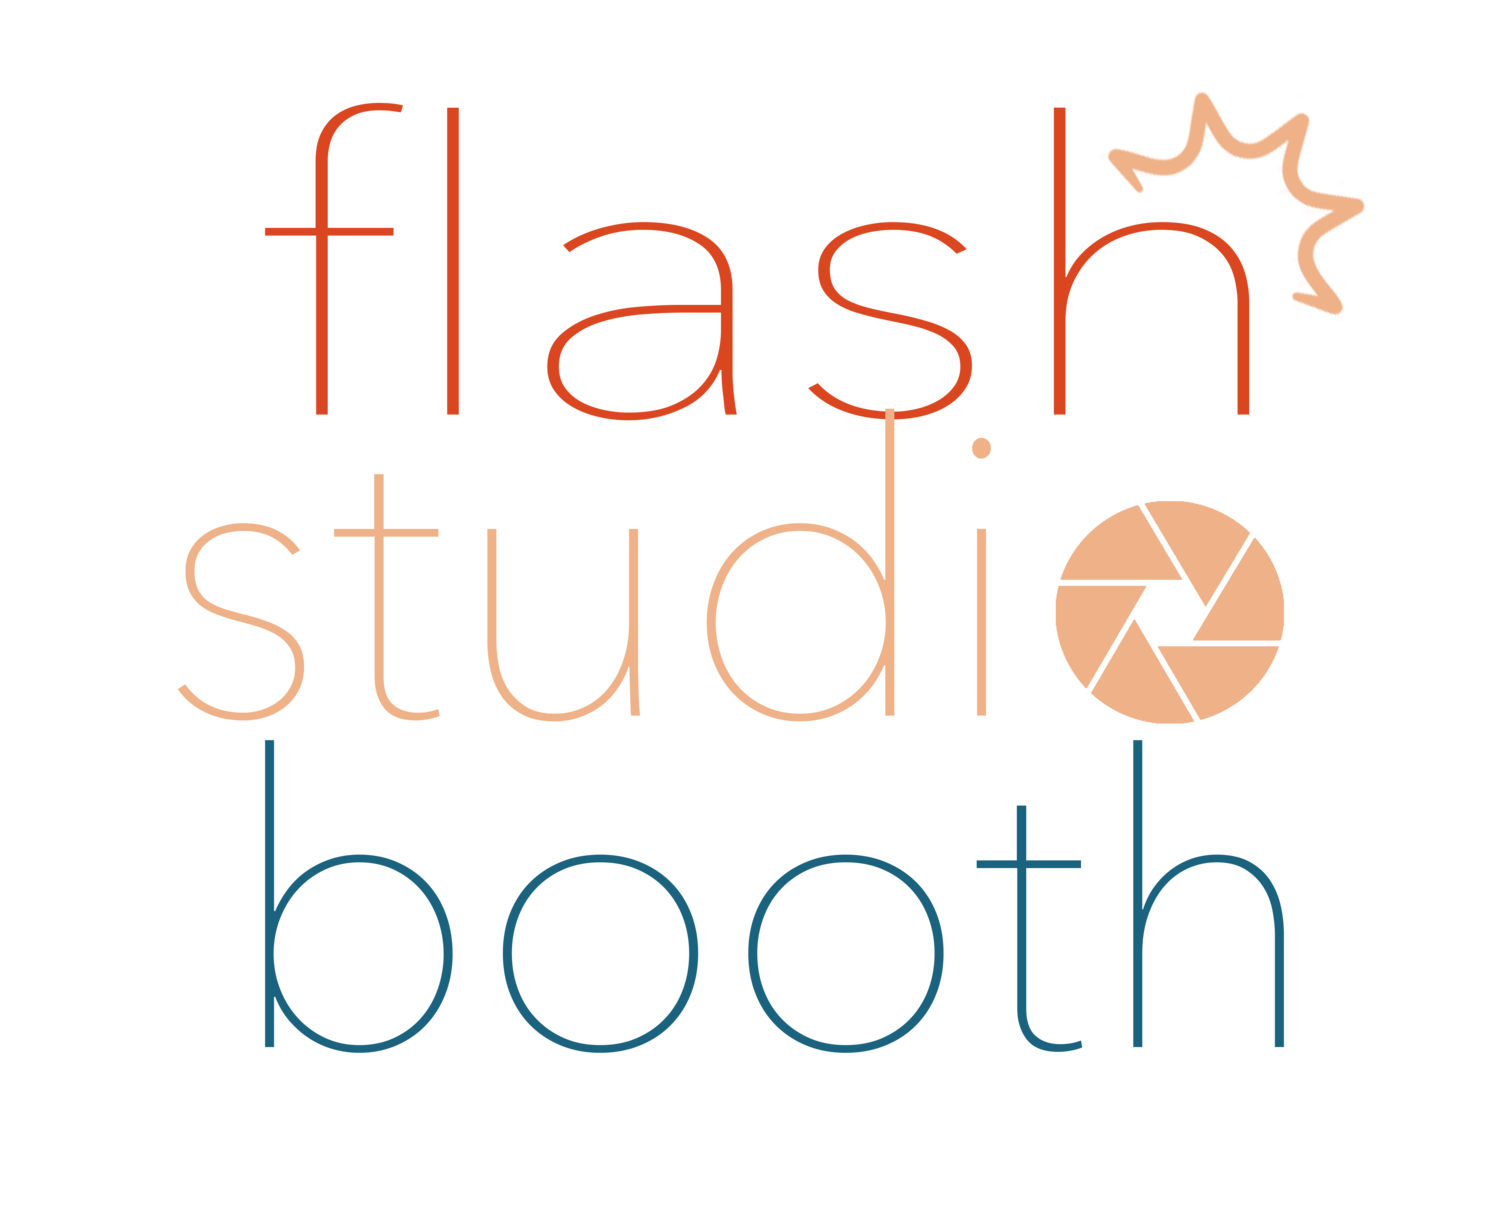 Flash Studio Booth